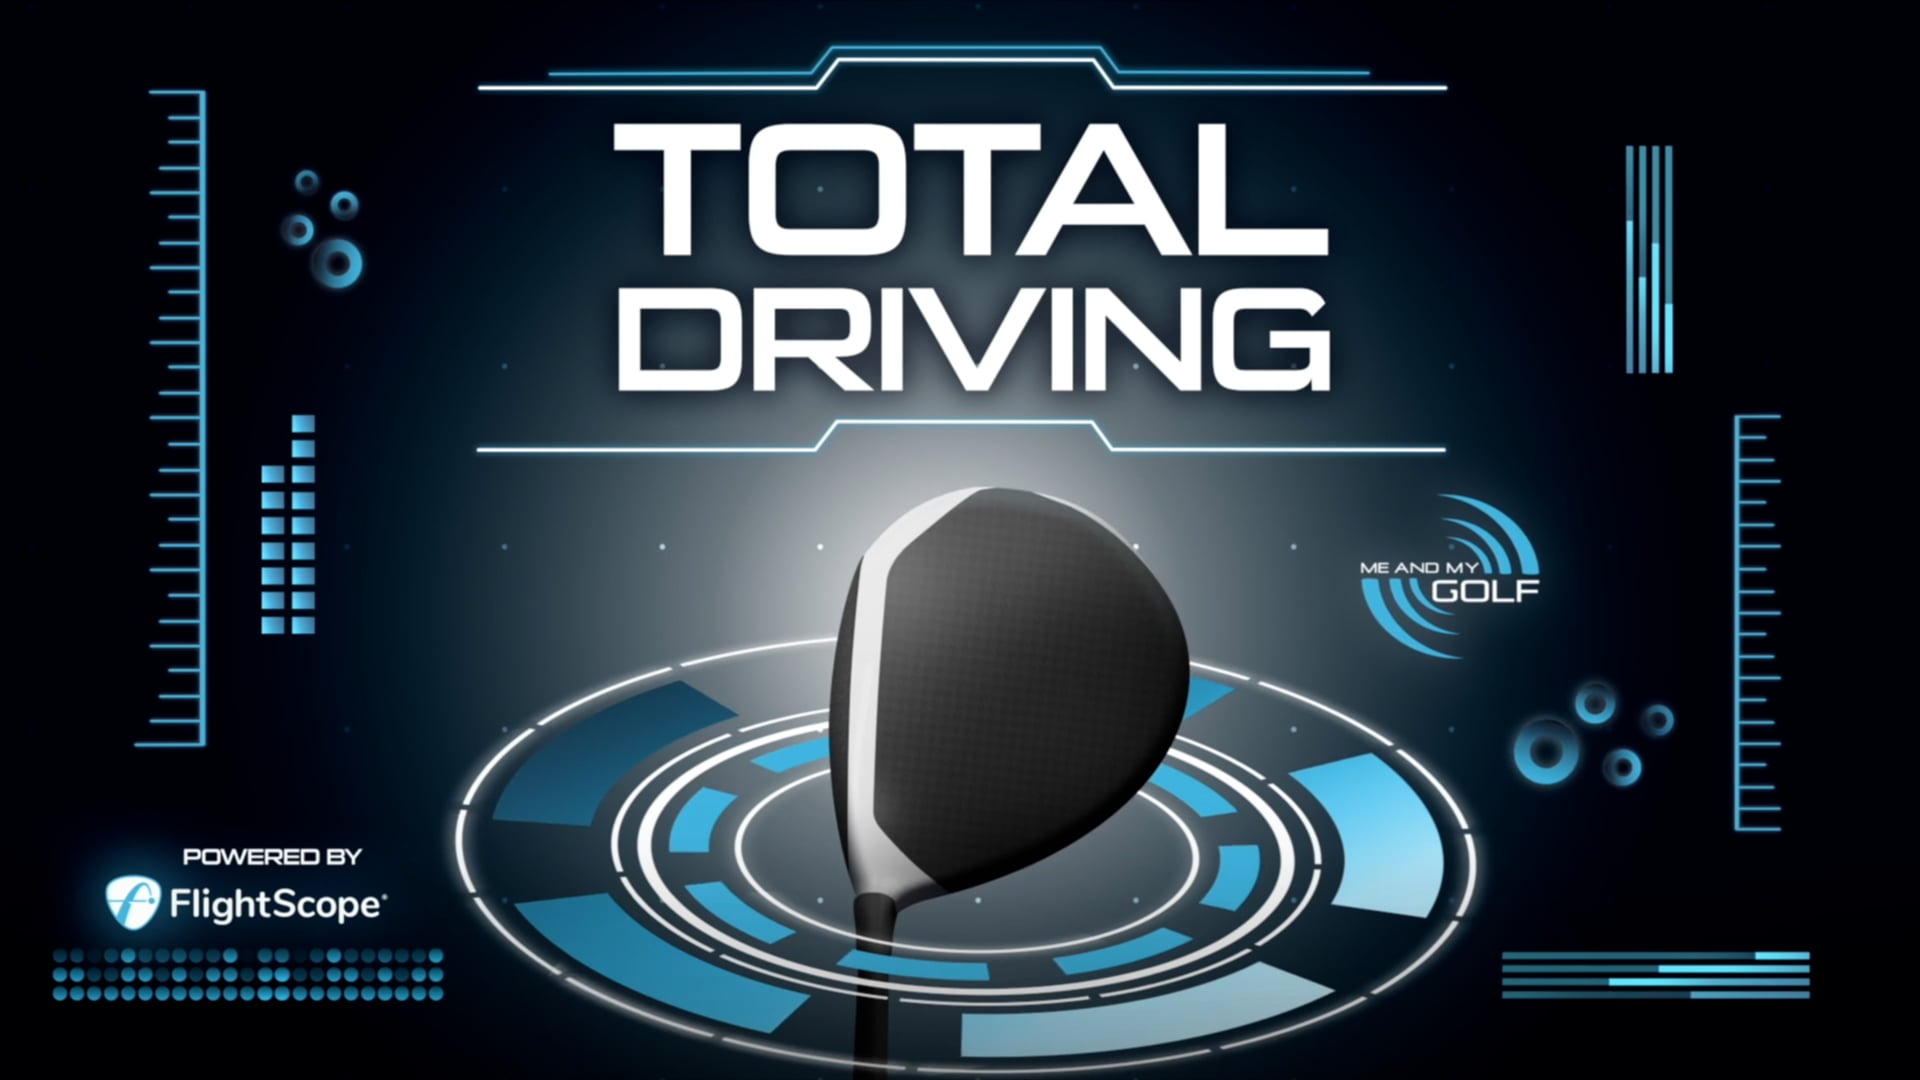 TOTAL DRIVING - SAMPLE VIDEO